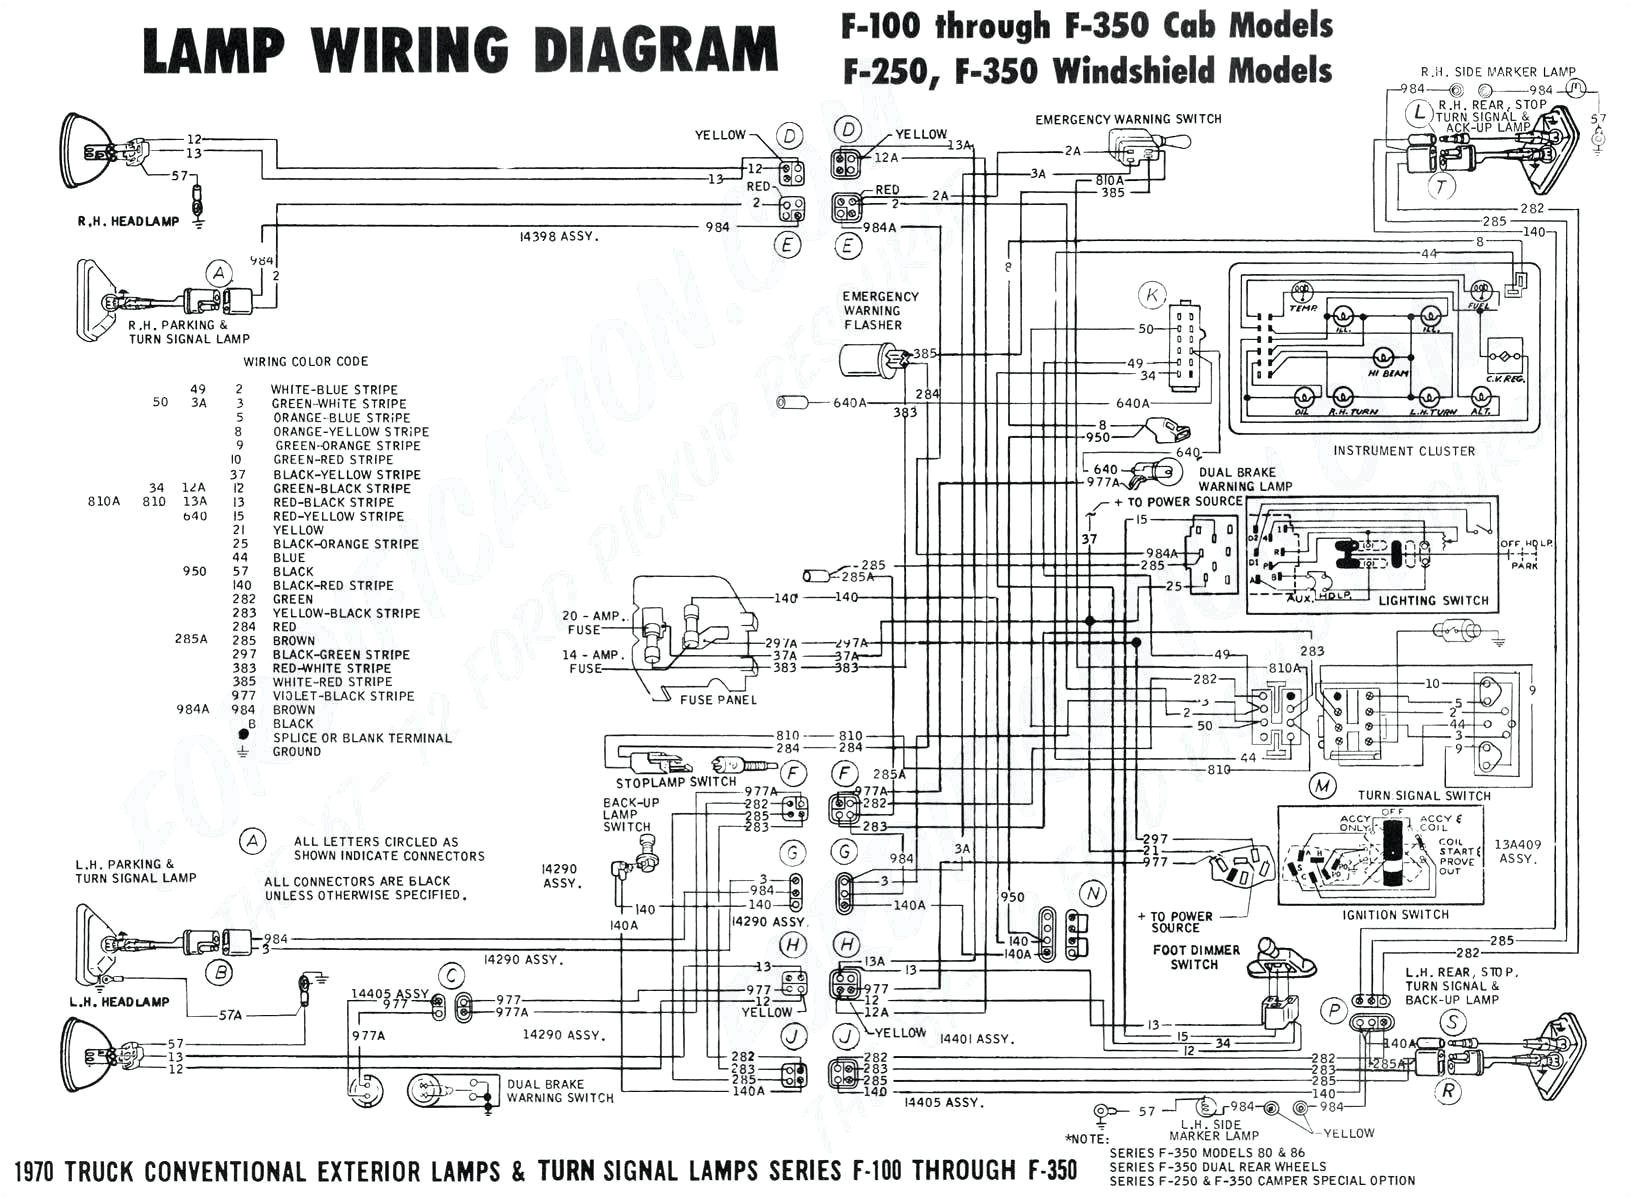 wiring diagram free download afv10a wiring diagram sheet wiring diagram free download afv10a